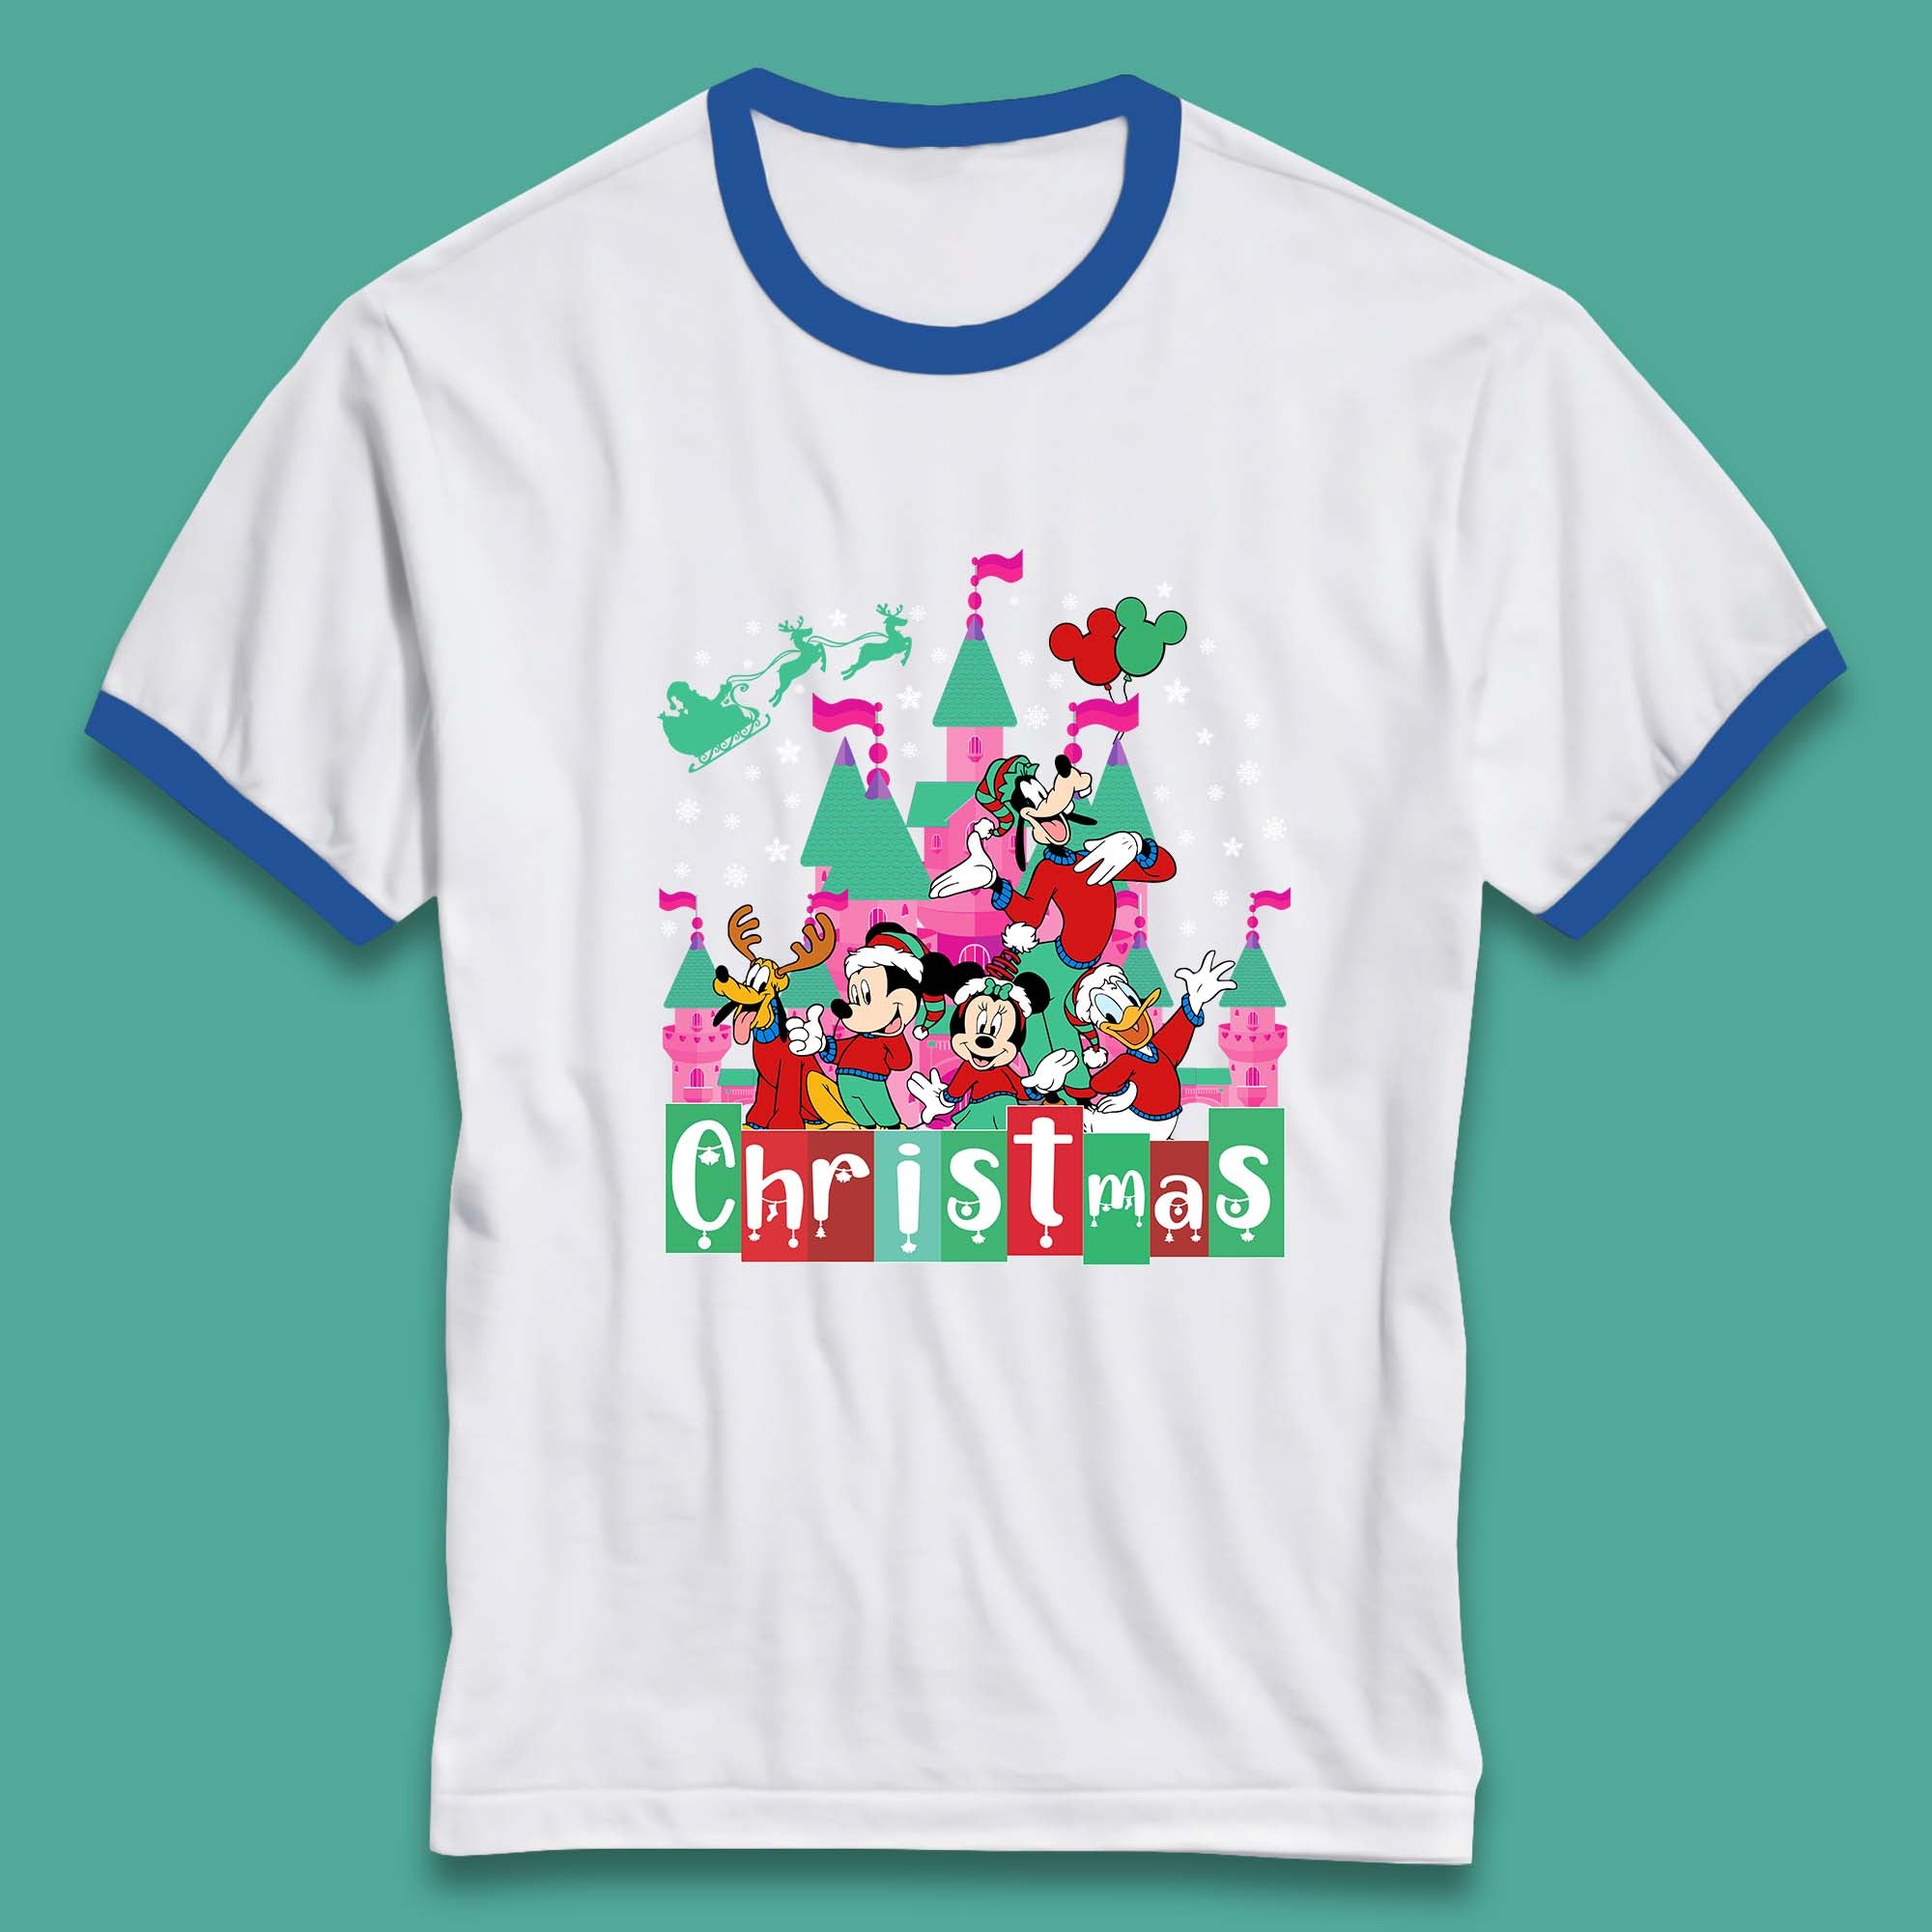 Christmas Disneyland Magic Kingdom Santa Mickey And Friends Xmas Holiday Disney Trip Ringer T Shirt